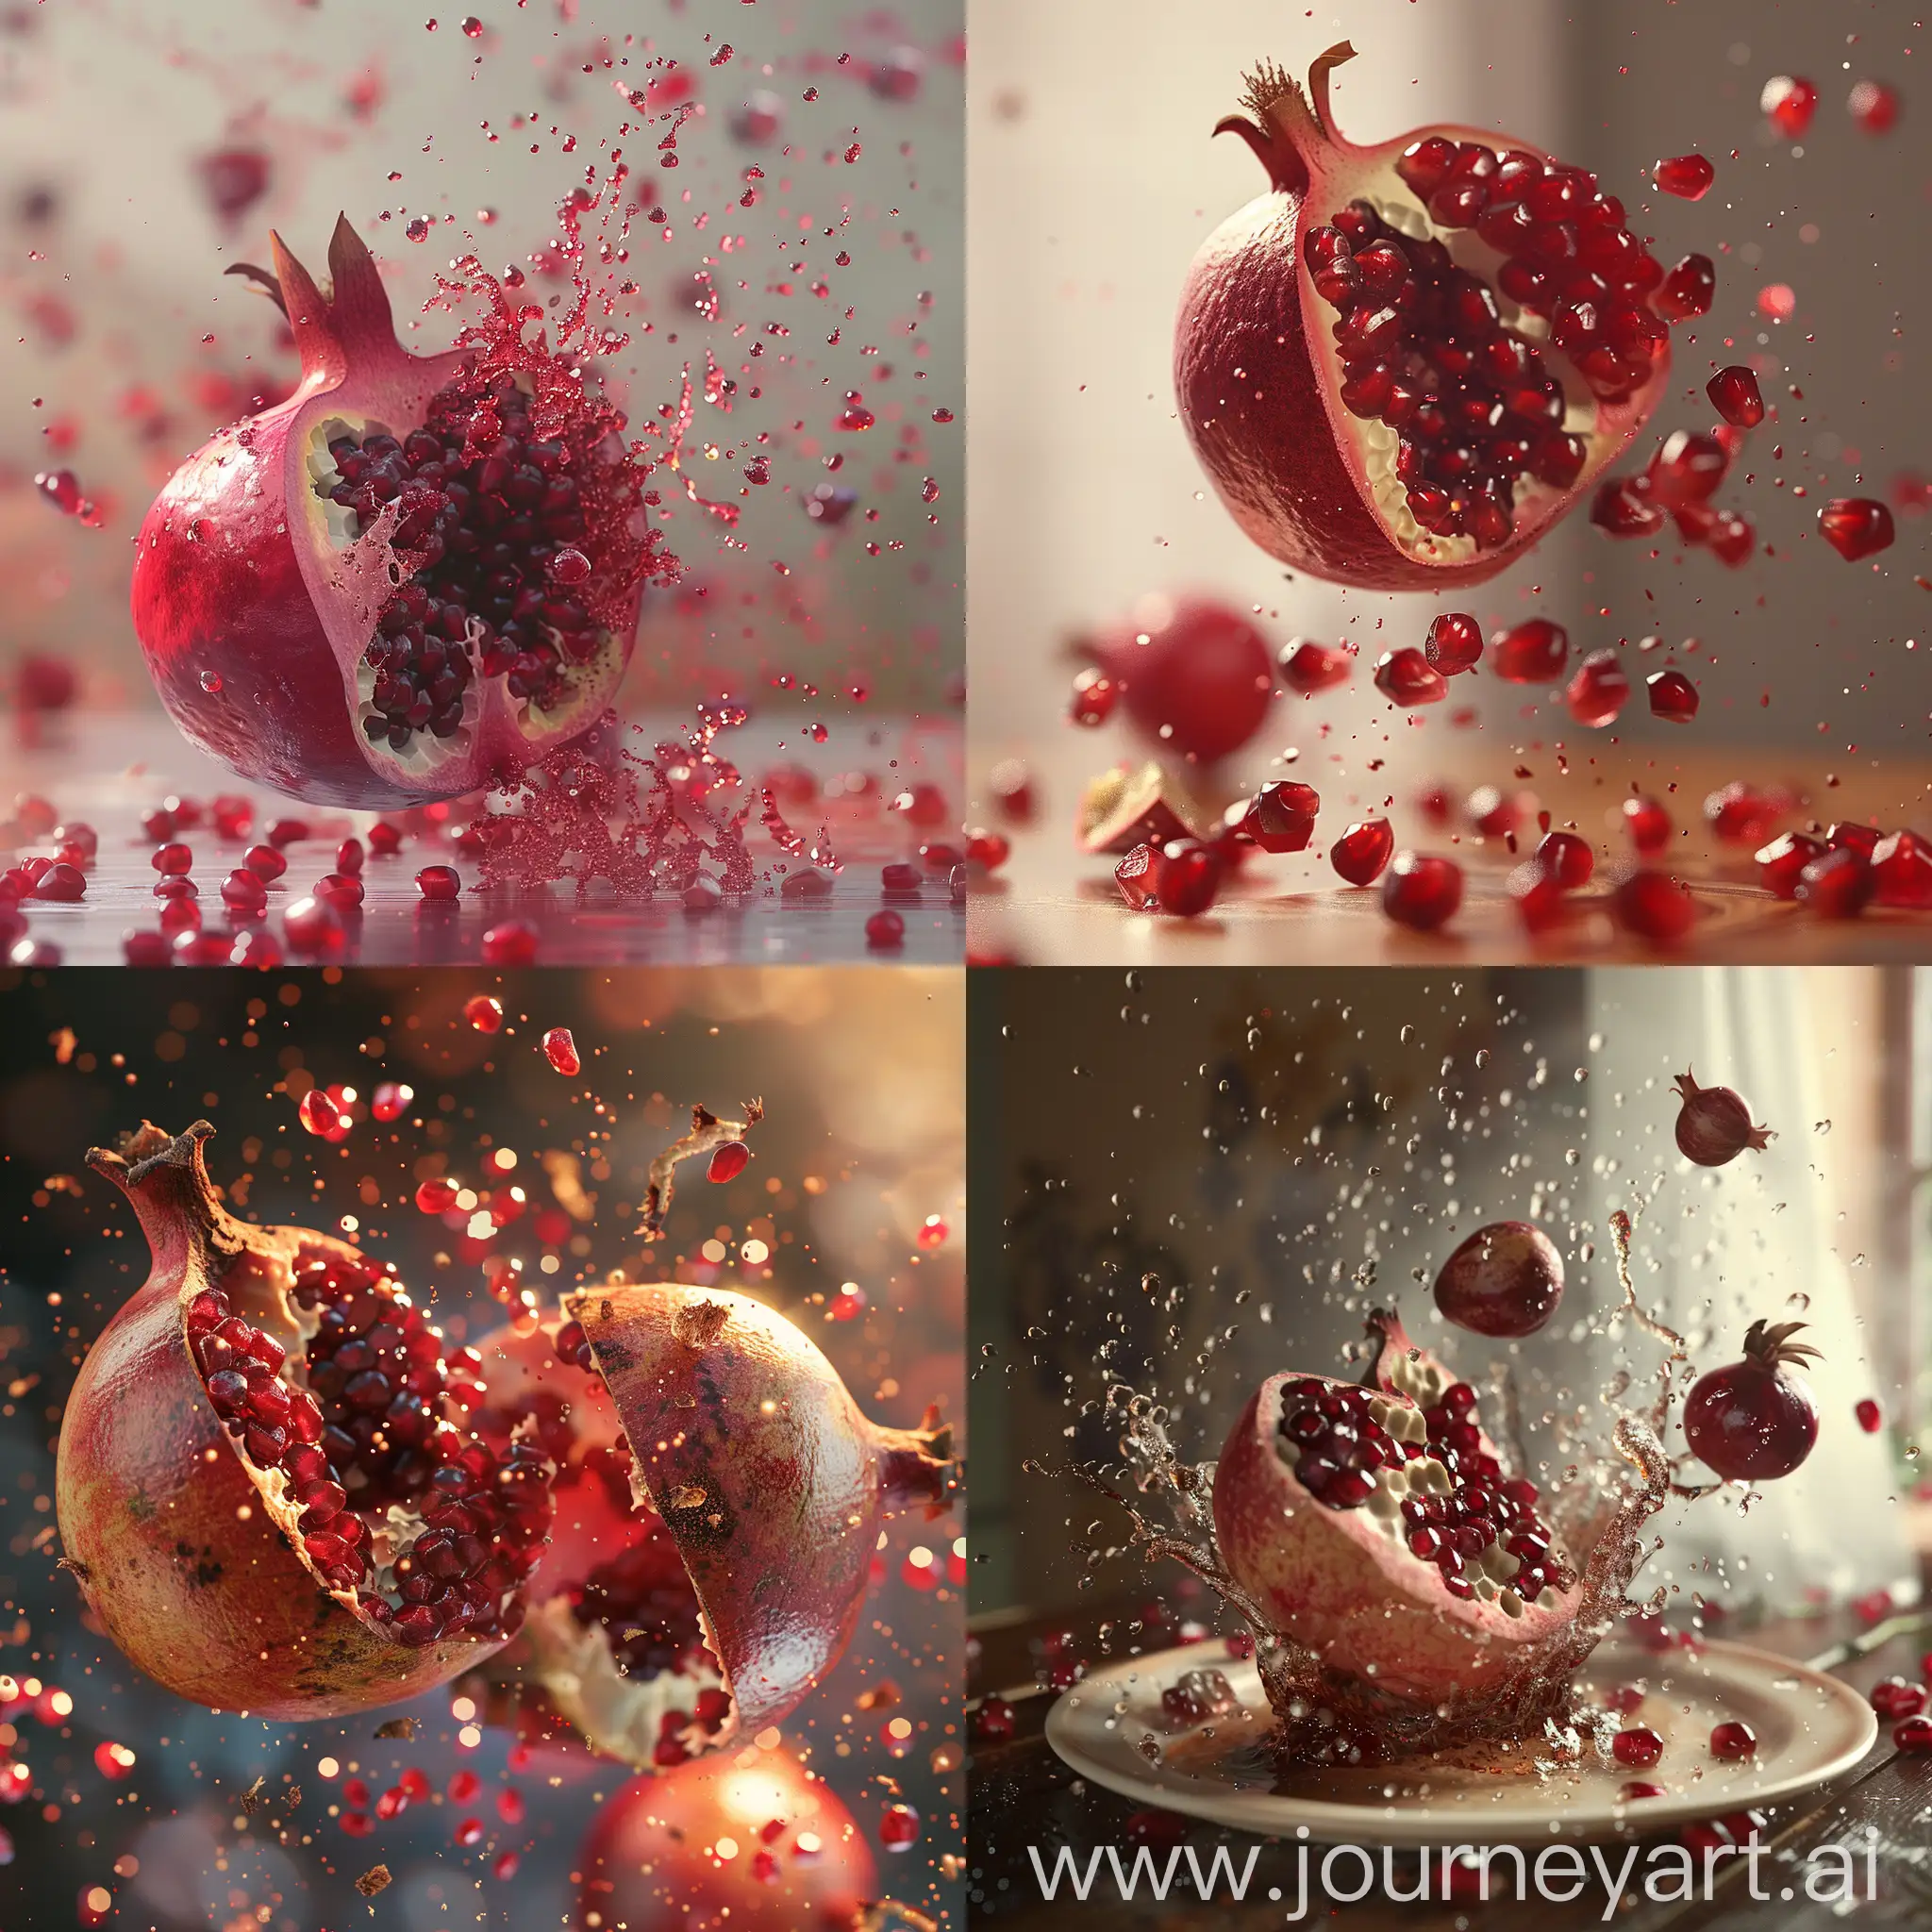 Vibrant-3D-Animation-Bursting-Pomegranate-in-AR-Aspect-Ratio-11